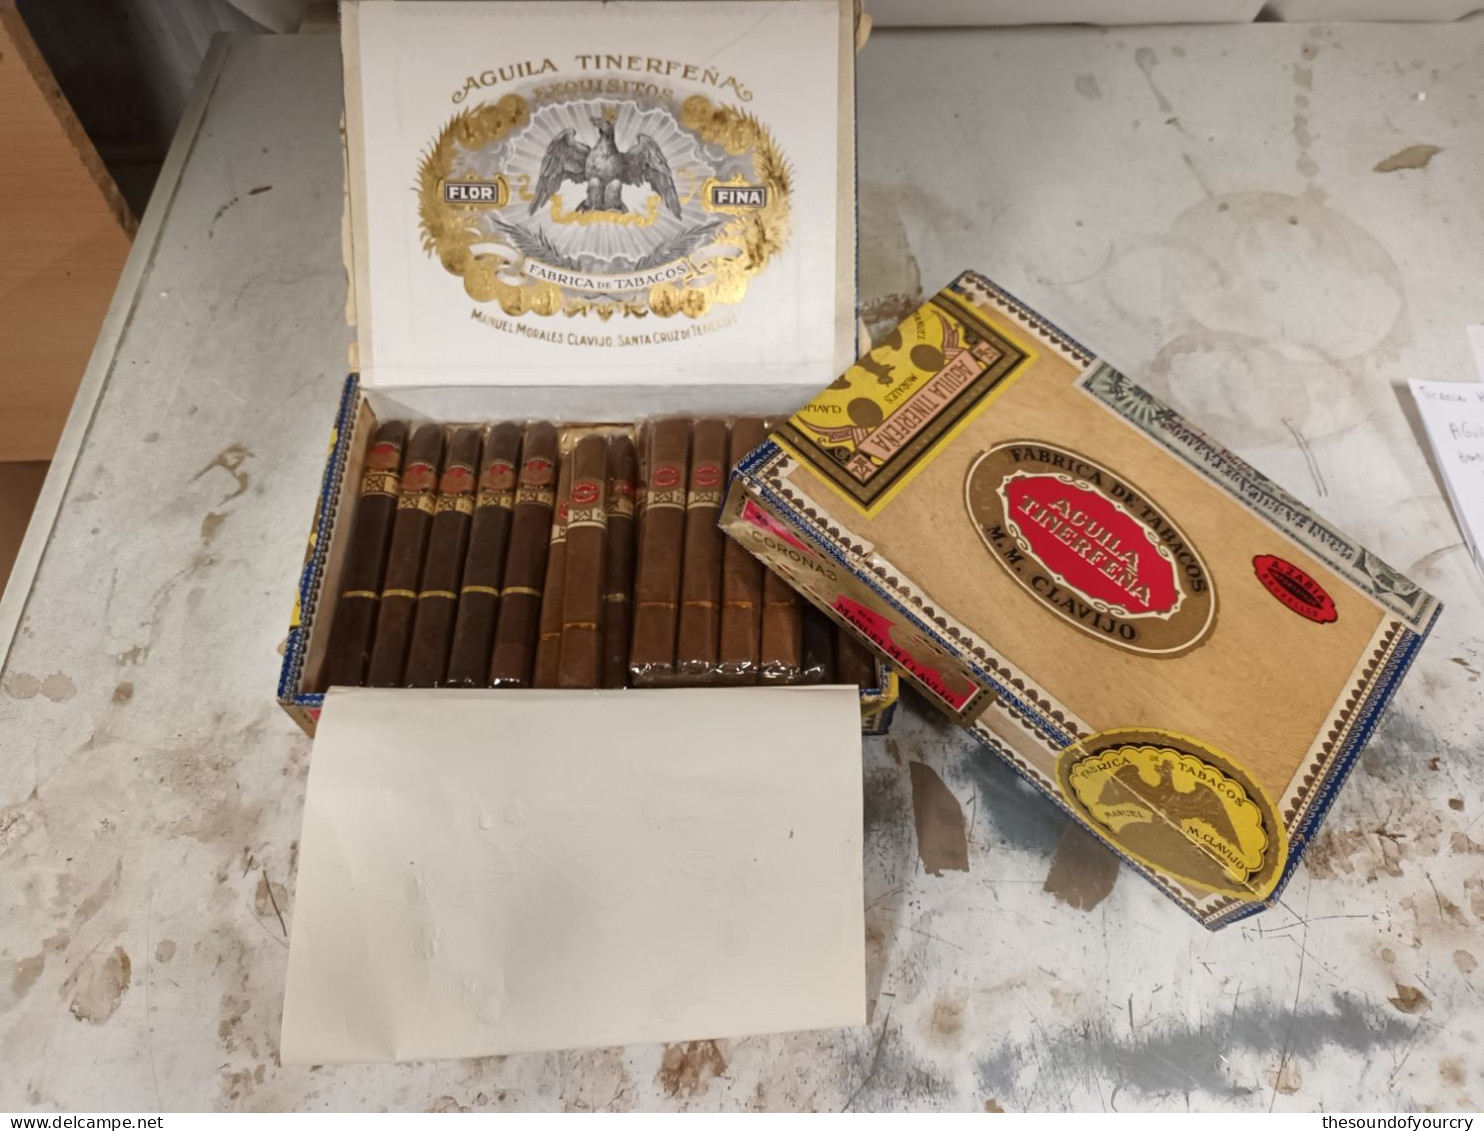 Sigarenbanden + Kist  Aguila Tinerfina  M.m. Clavijo - Empty Cigar Cabinet